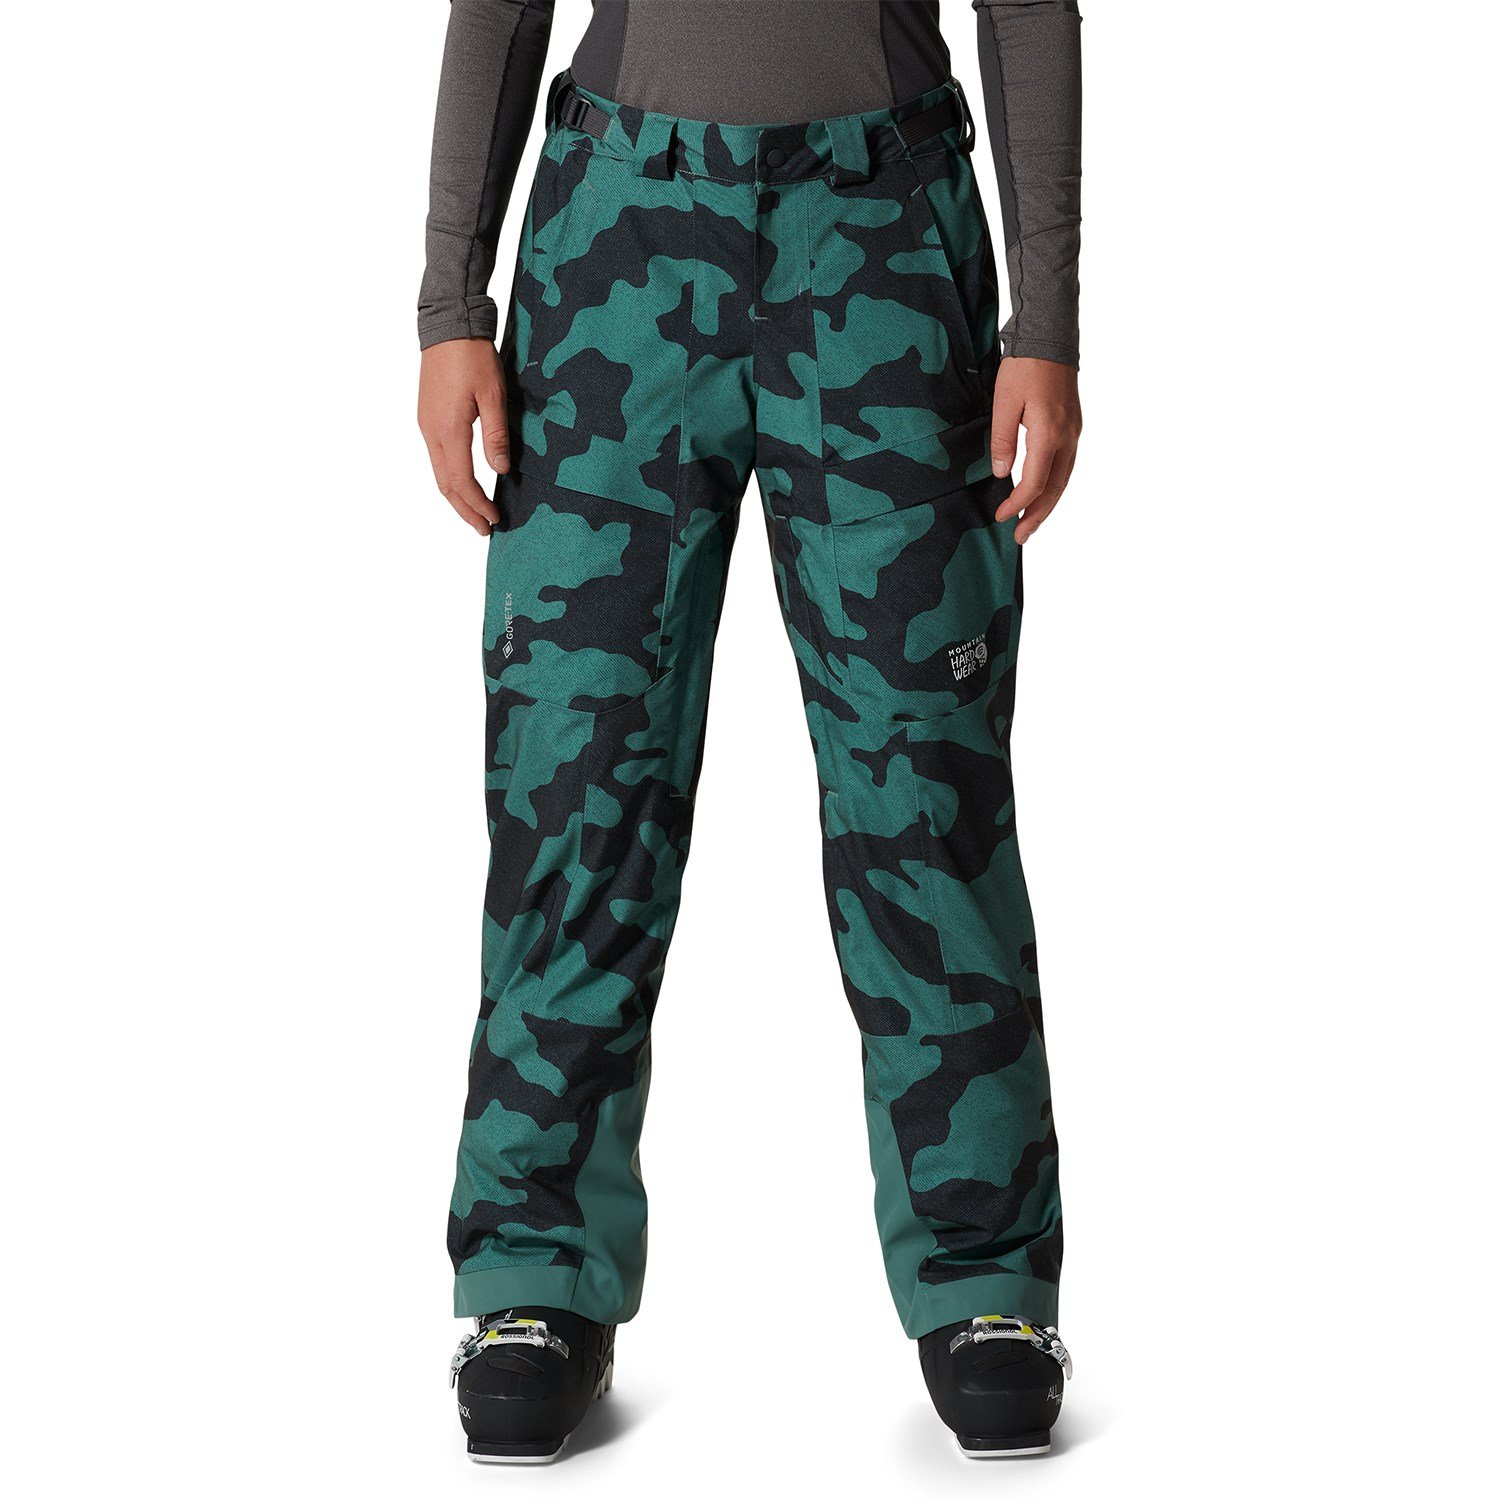 Брюки Mountain Hardwear Cloud Bank GORE-TEX Insulated, цвет Mint Palm Camo брюки turret gore tex shell pants spyder черный